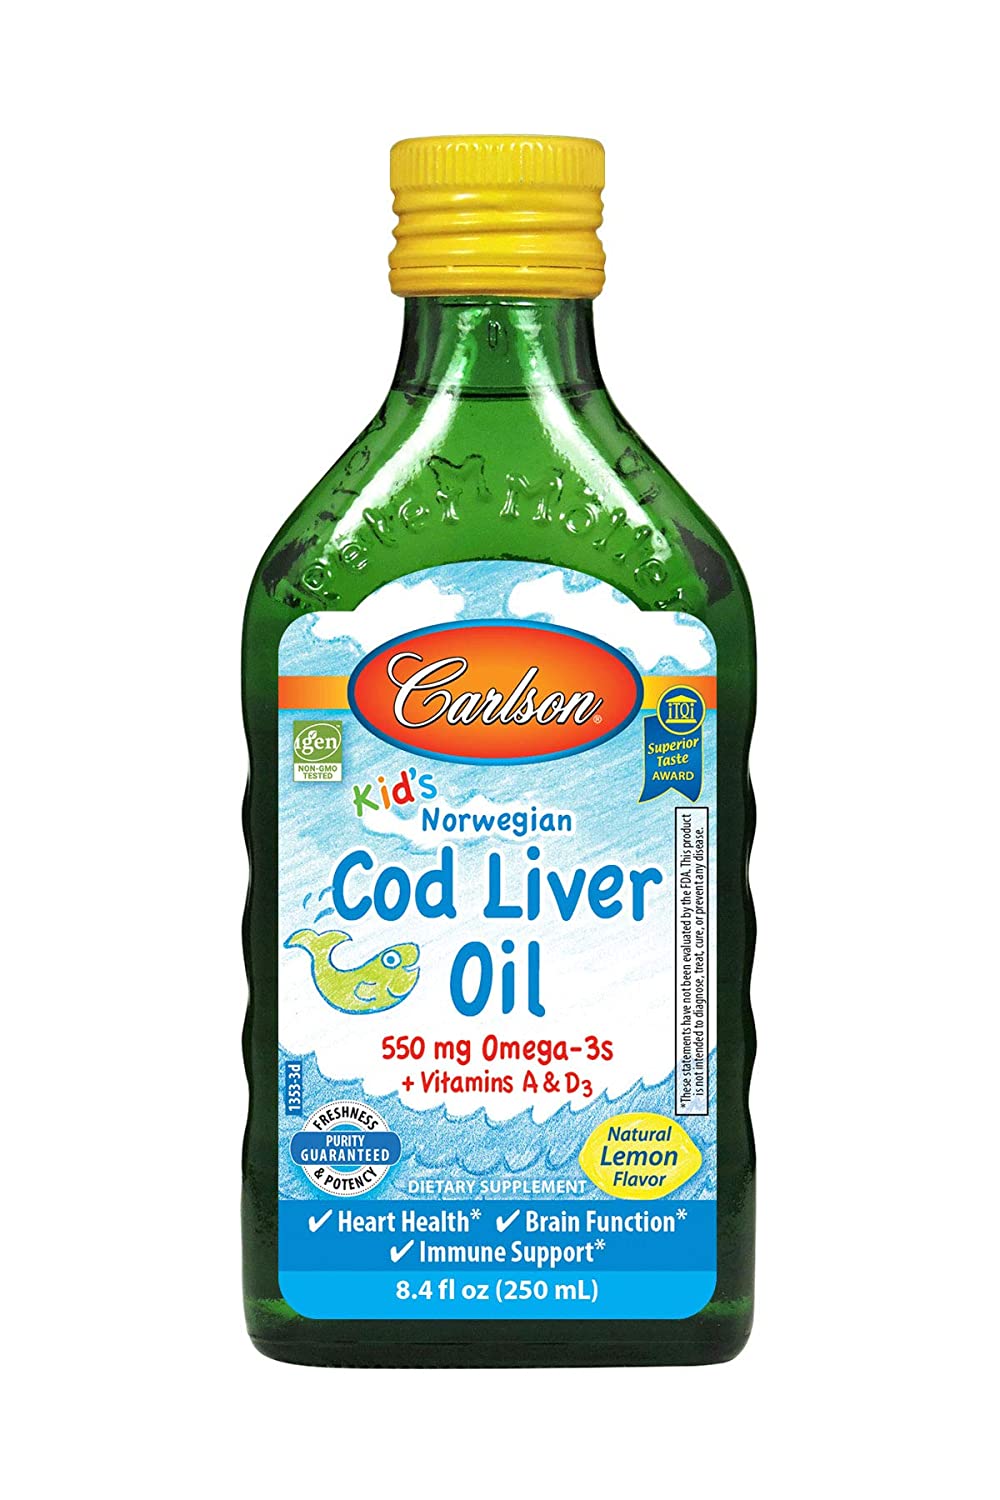 Carlson - Kid's Cod Liver Oil, 550 mg Omega-3s, Vitamins A & D3, Wild Norwegian, Lemon, 250 ml